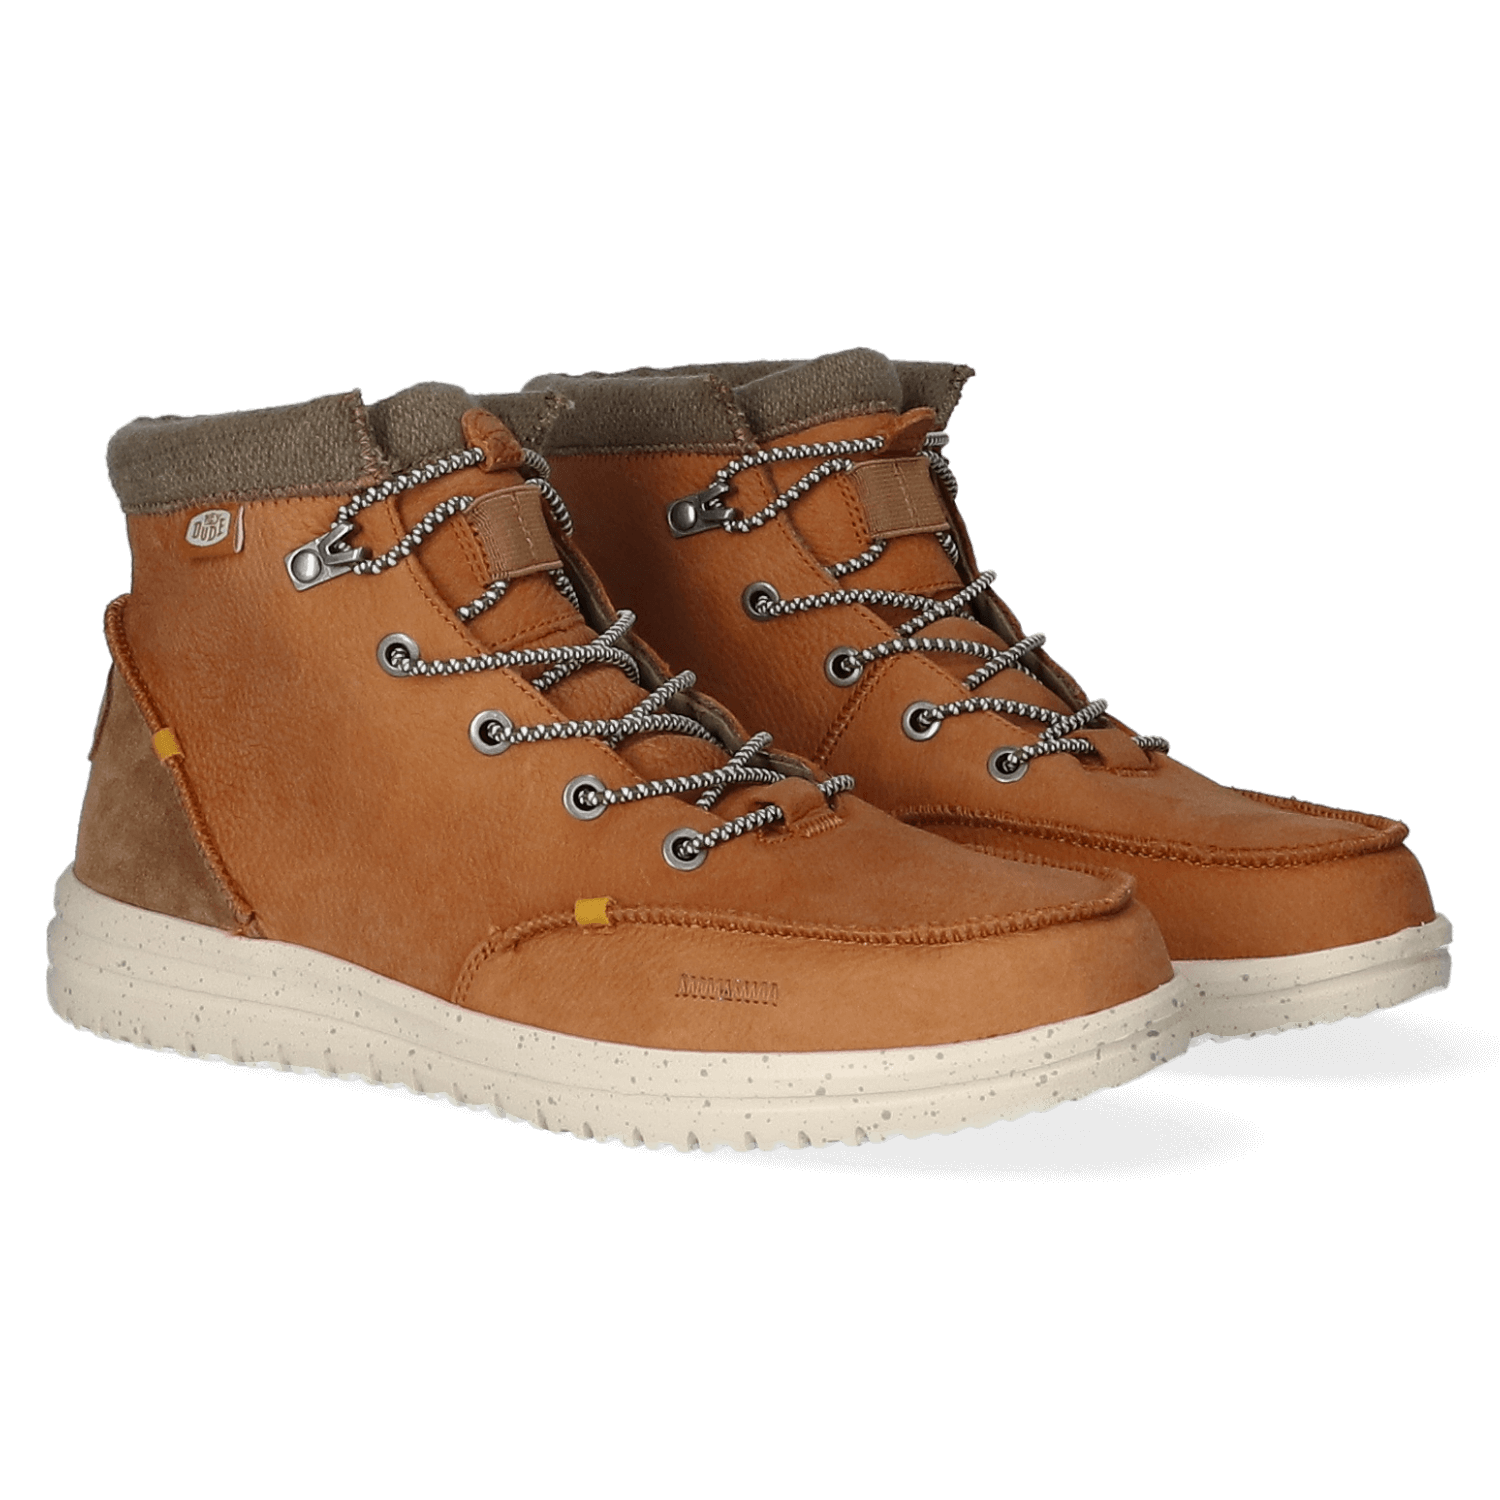 Bradley Leather Heren Boots Cognac HD40189-21N | HEYDUDE